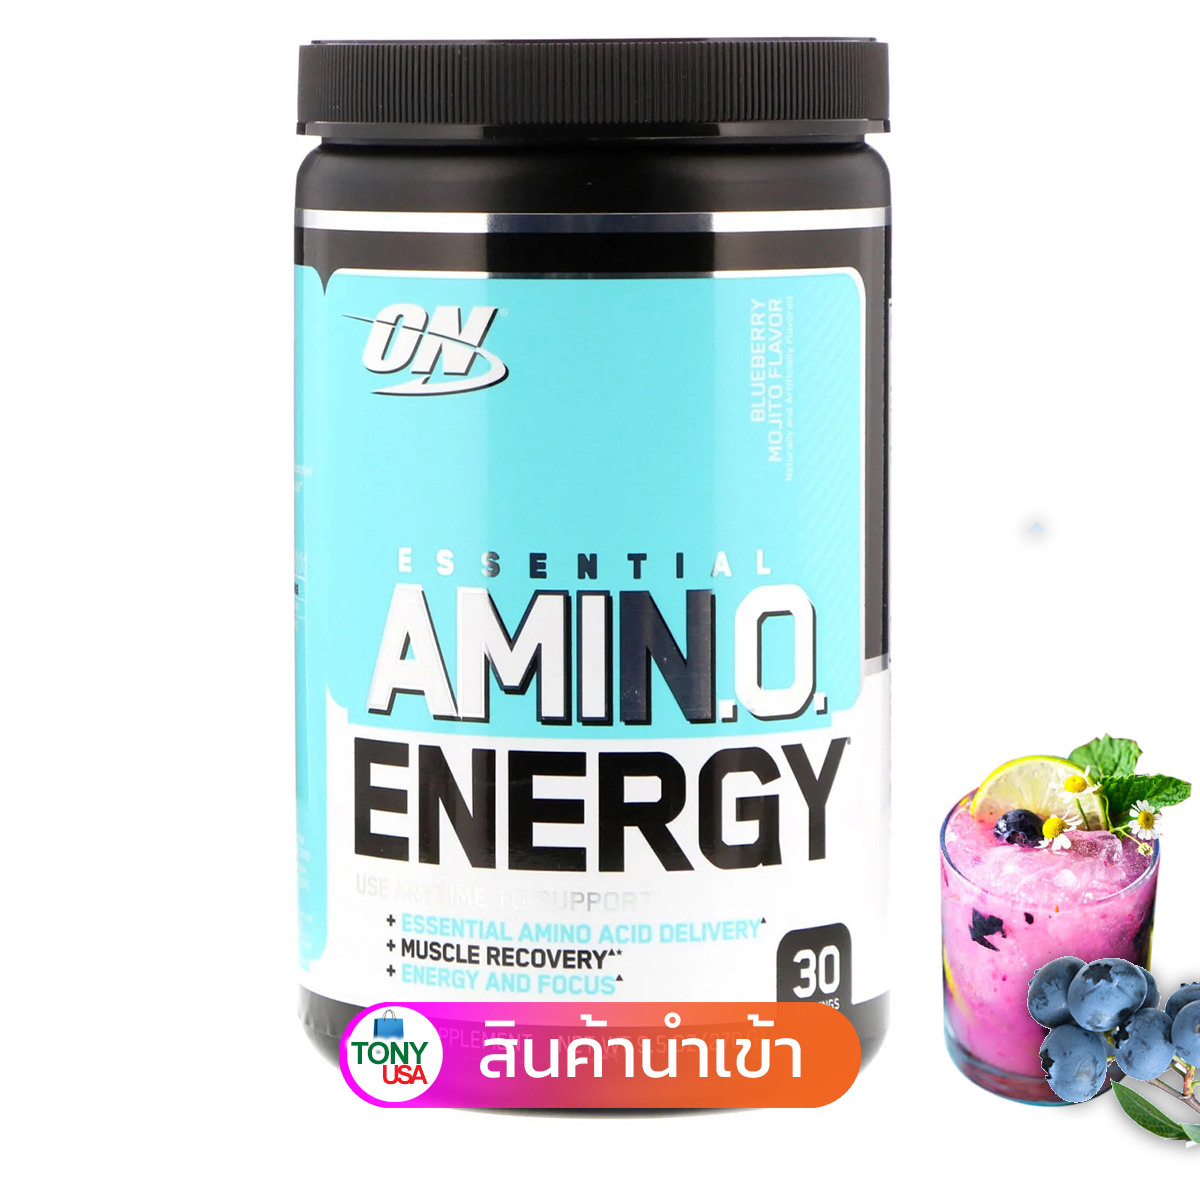 Optimum Nutrition, ESSENTIAL AMIN.O. ENERGY, Blueberry Mojito Flavor, 9.5 oz (270 g) Amino Energy, Amino Acid, Pre-Workout บลูเบอรี่ โมฮิโตะ อะมิโน แอซิด พรีเวิร์คเอ้าท์ ก่อนออกกำลังกาย